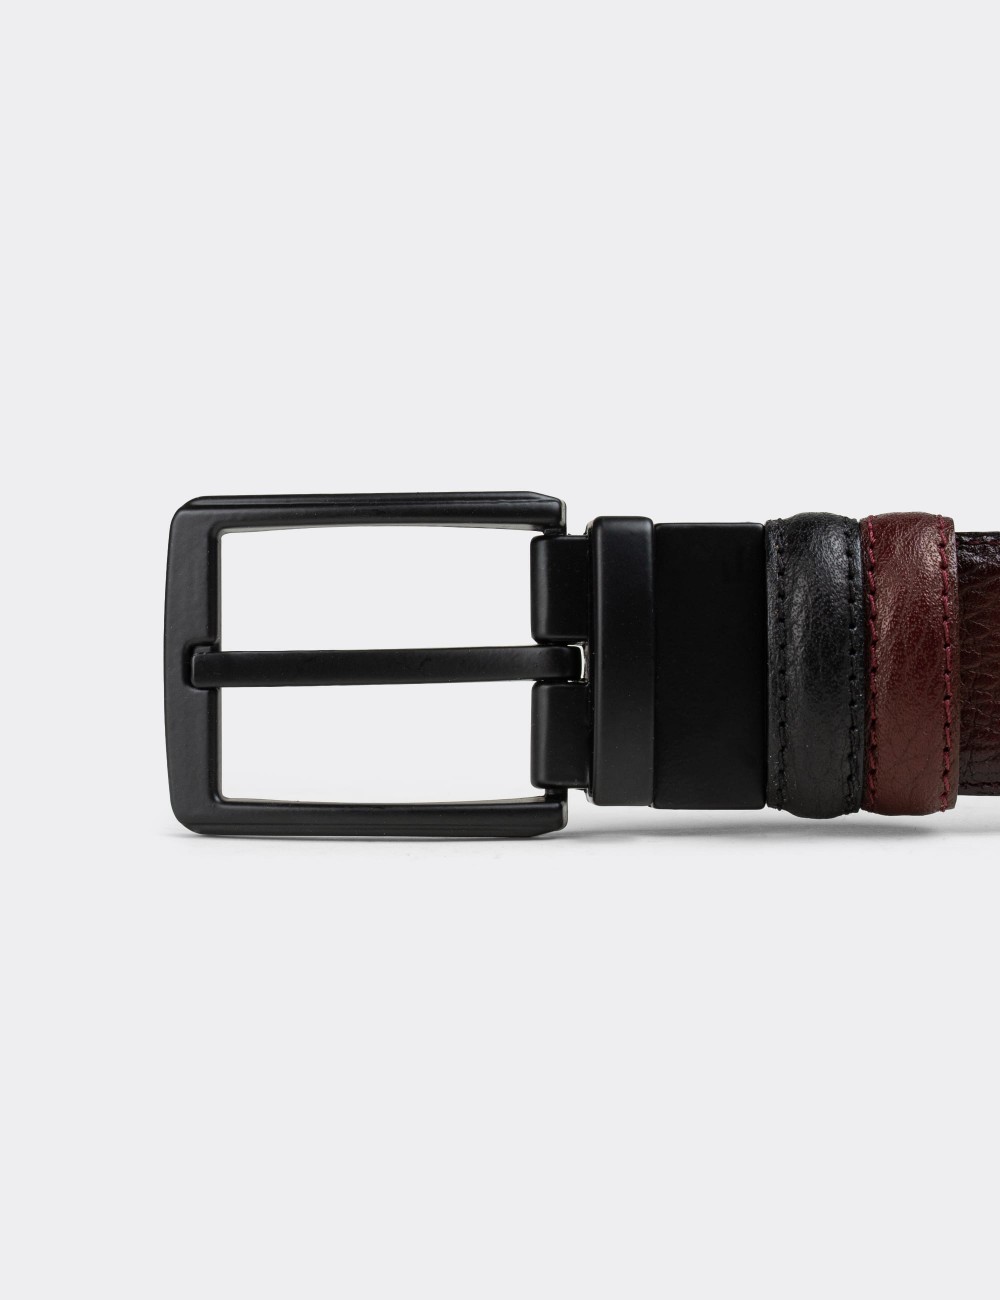  Leather Burgundy and Black Double Sided Men's Belt - K0408MBRDW01